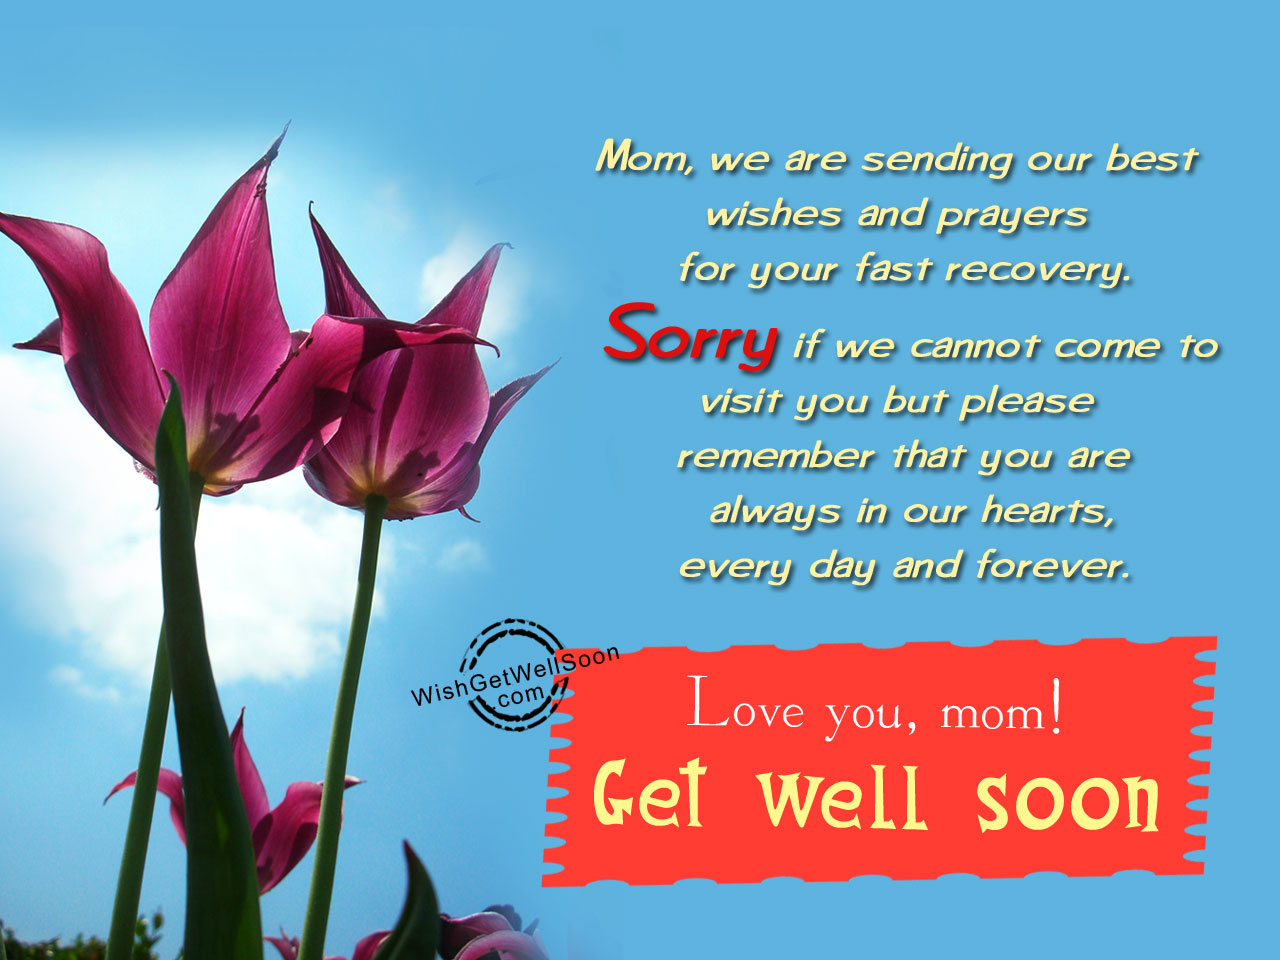 Get well soon-,Dear mom